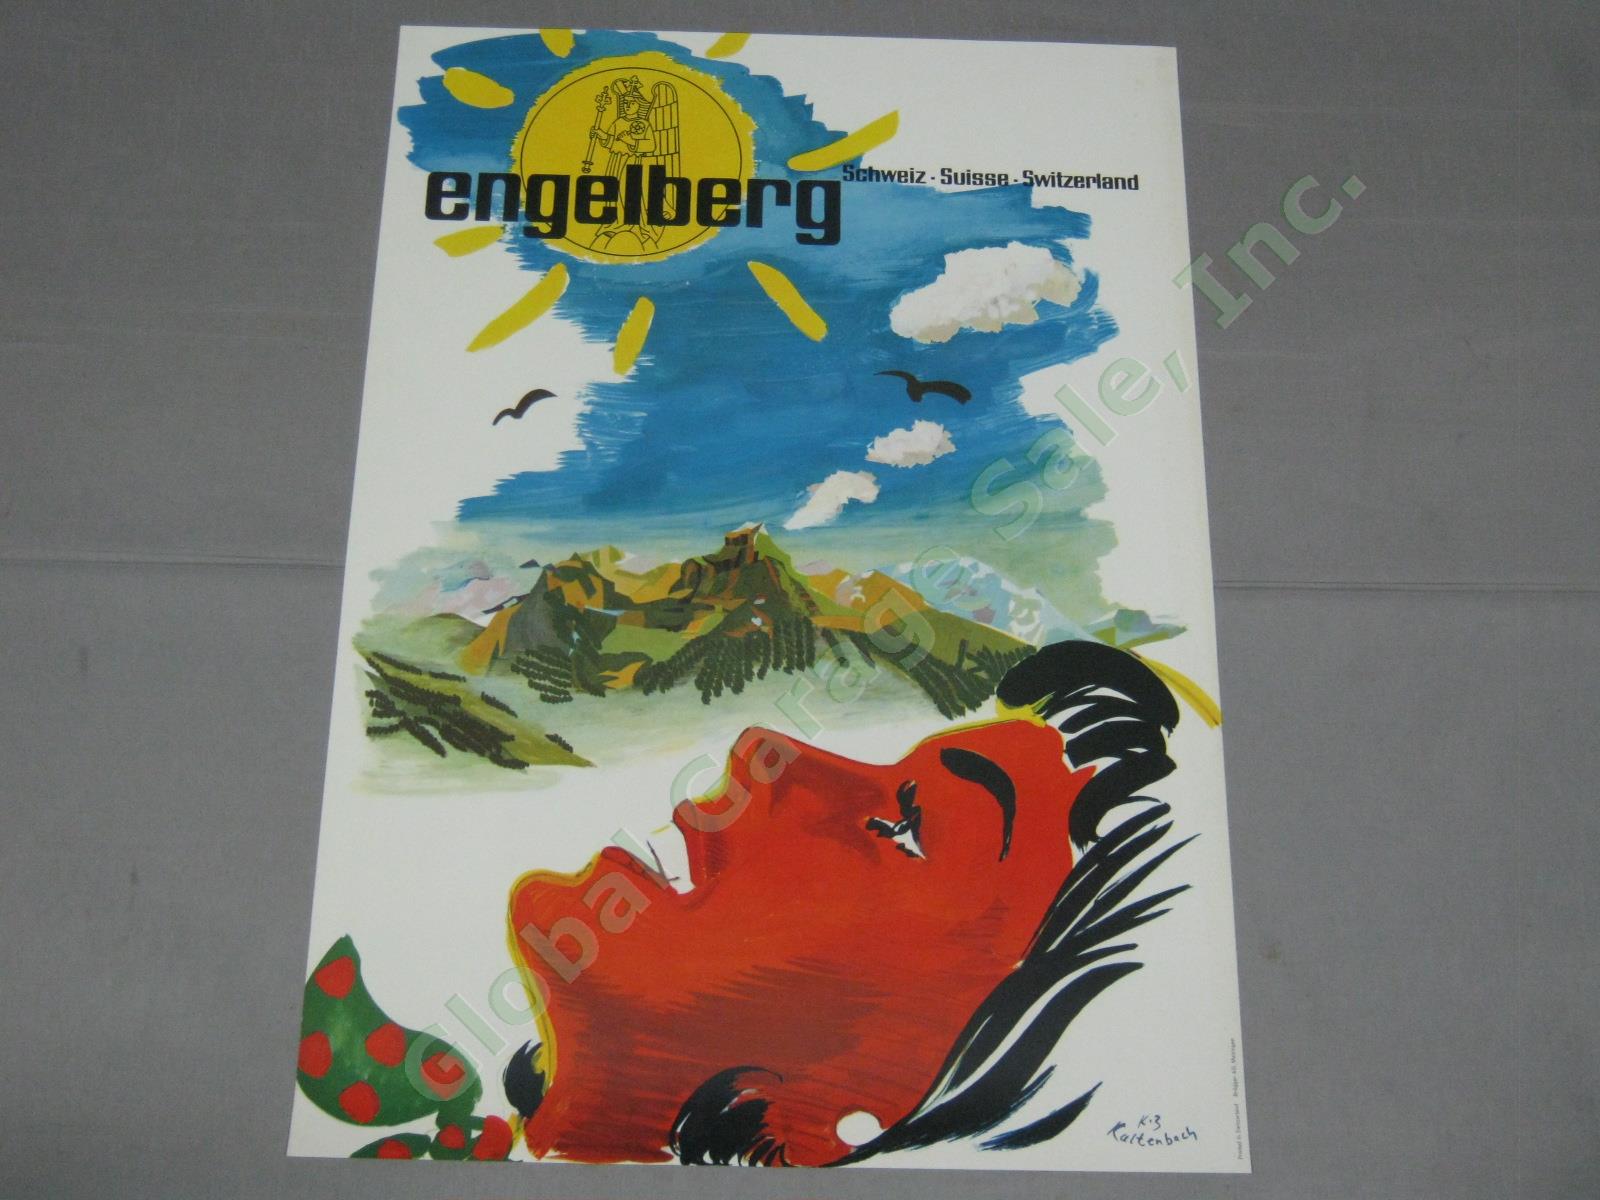 Vtg Orig 1960 Swiss Engelberg Travel Ski Resort Poster Switzerland Kaltenbach NR